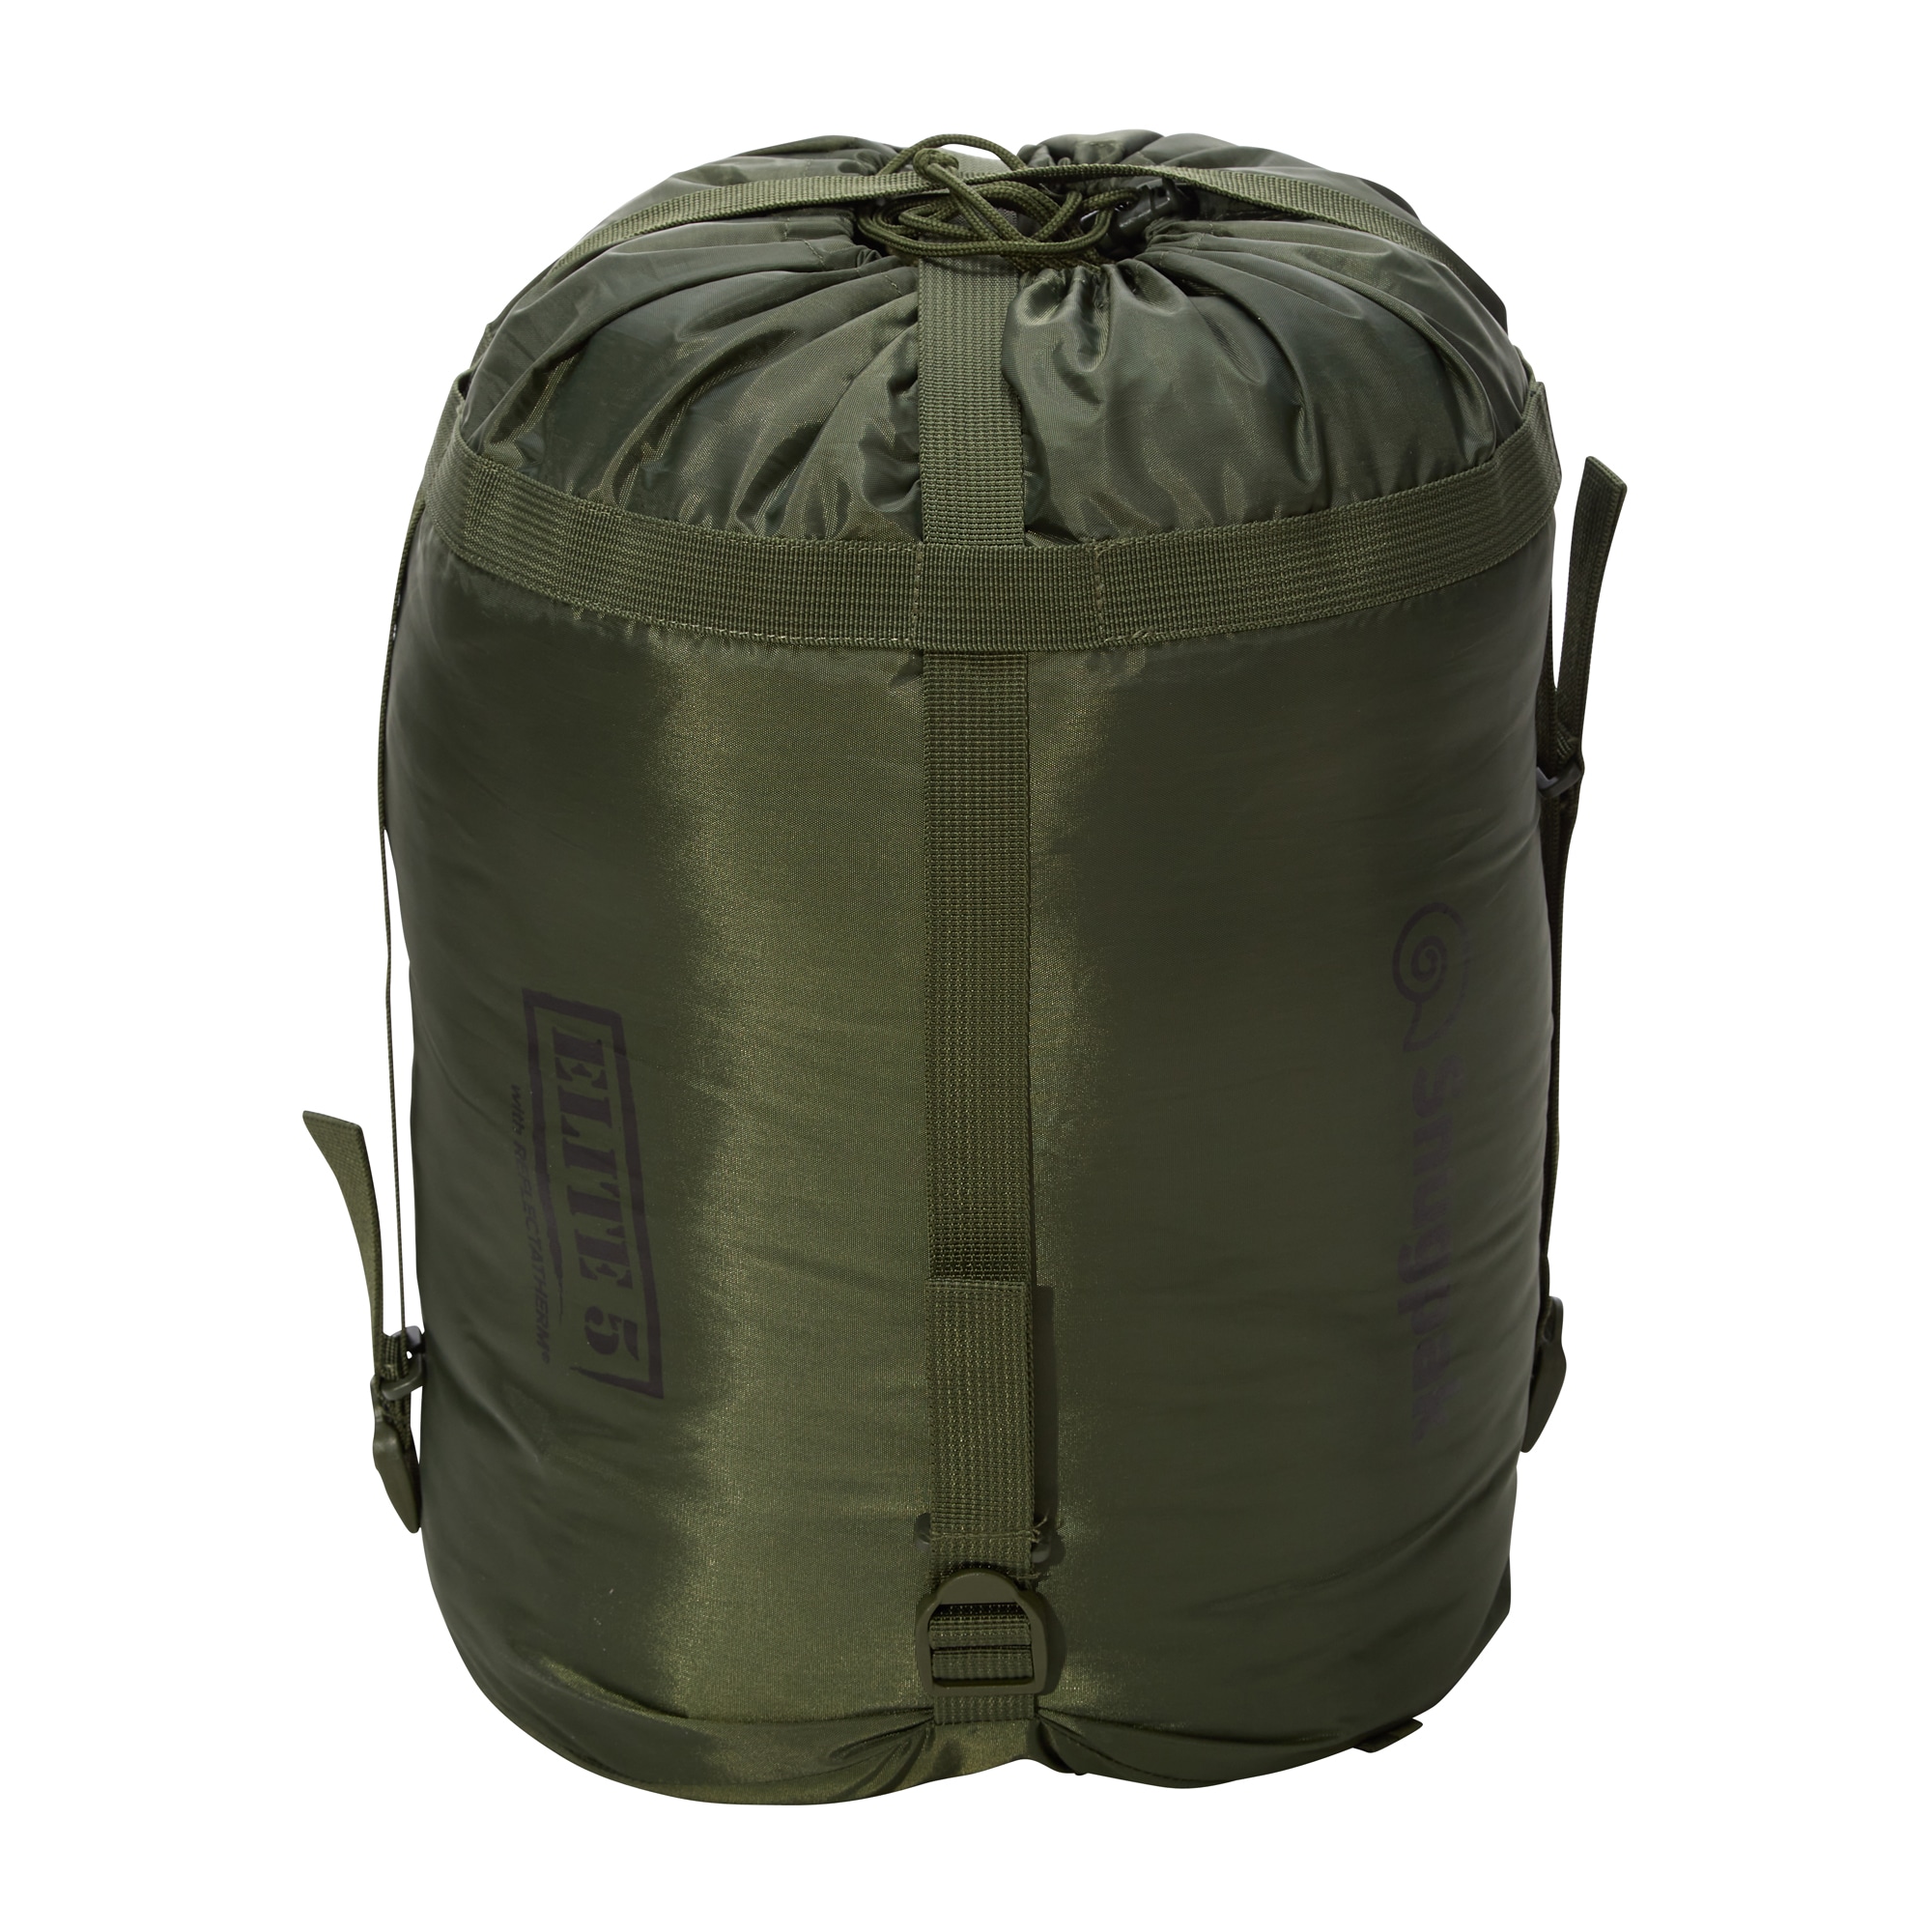 Purchase the Snugpak Sleeping Bag Snugpak Elite 5 olive by ASMC